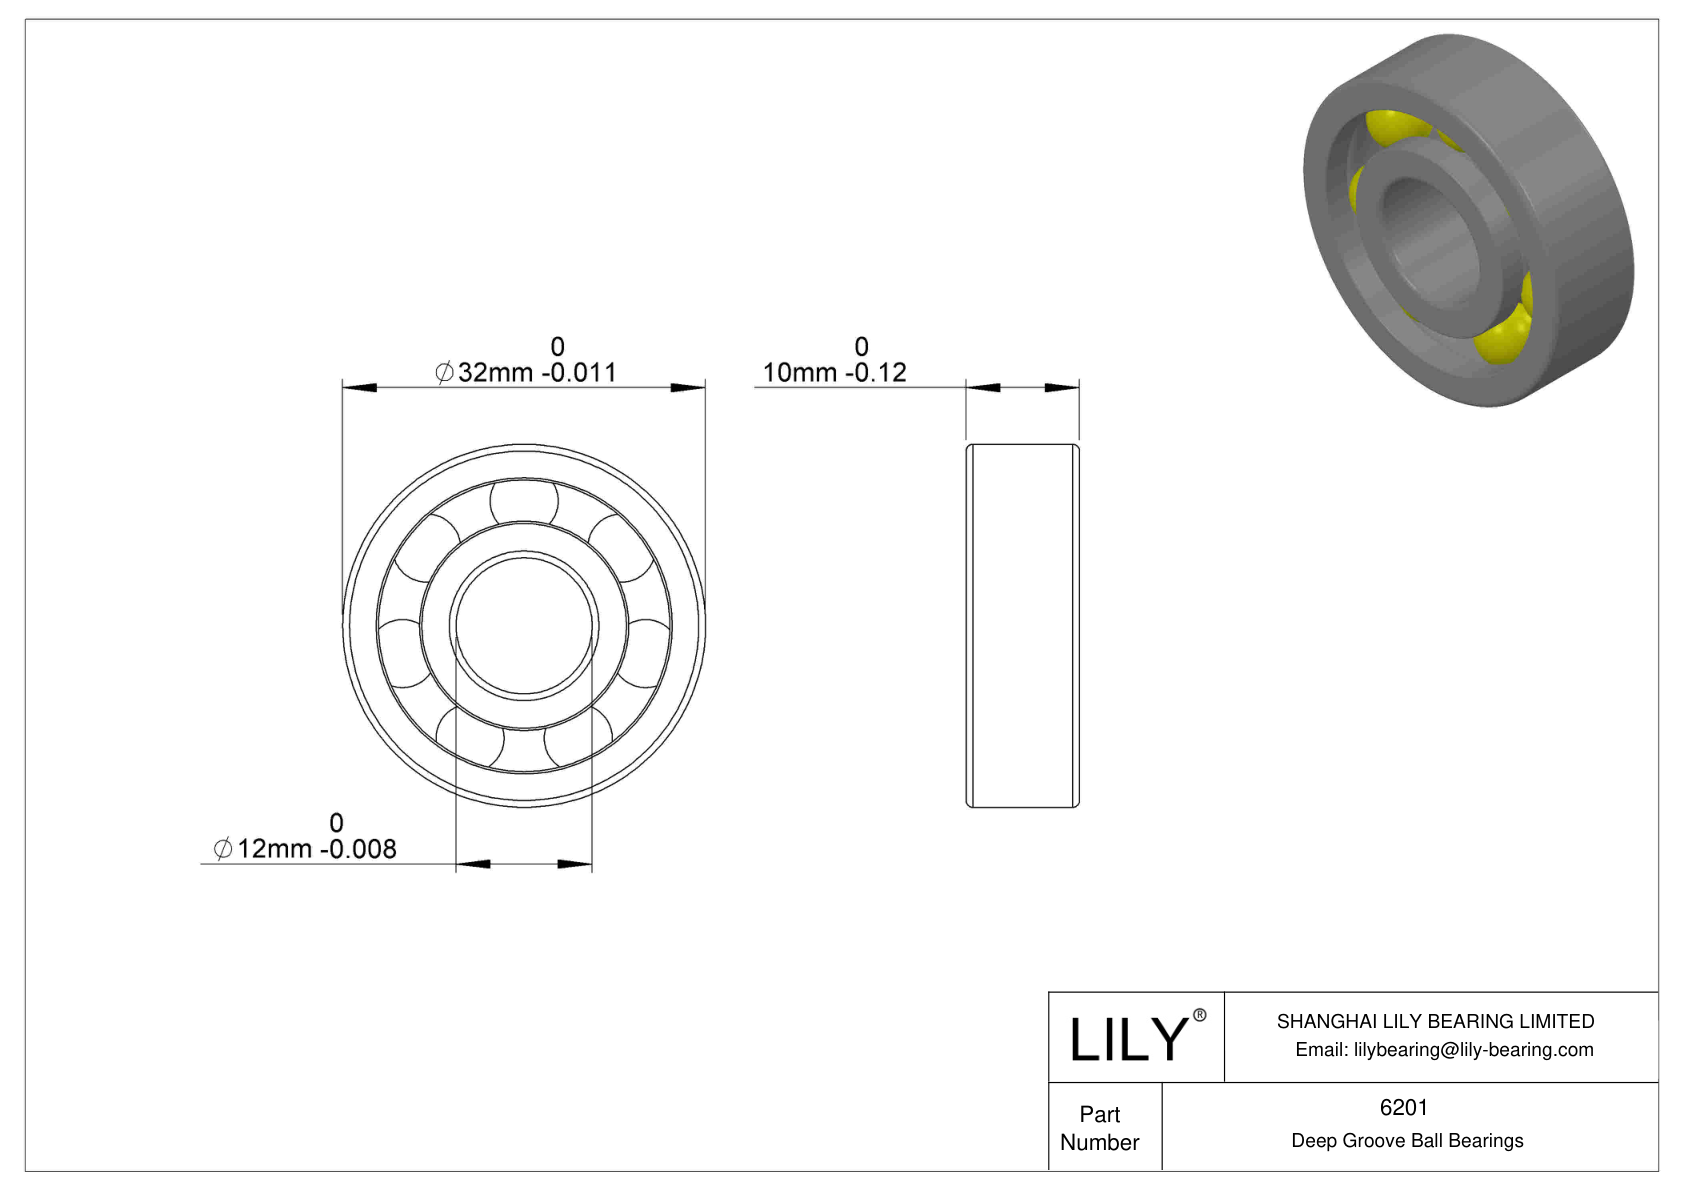 LILY-PU620150-20 Polyurethane Coated Bearing cad drawing